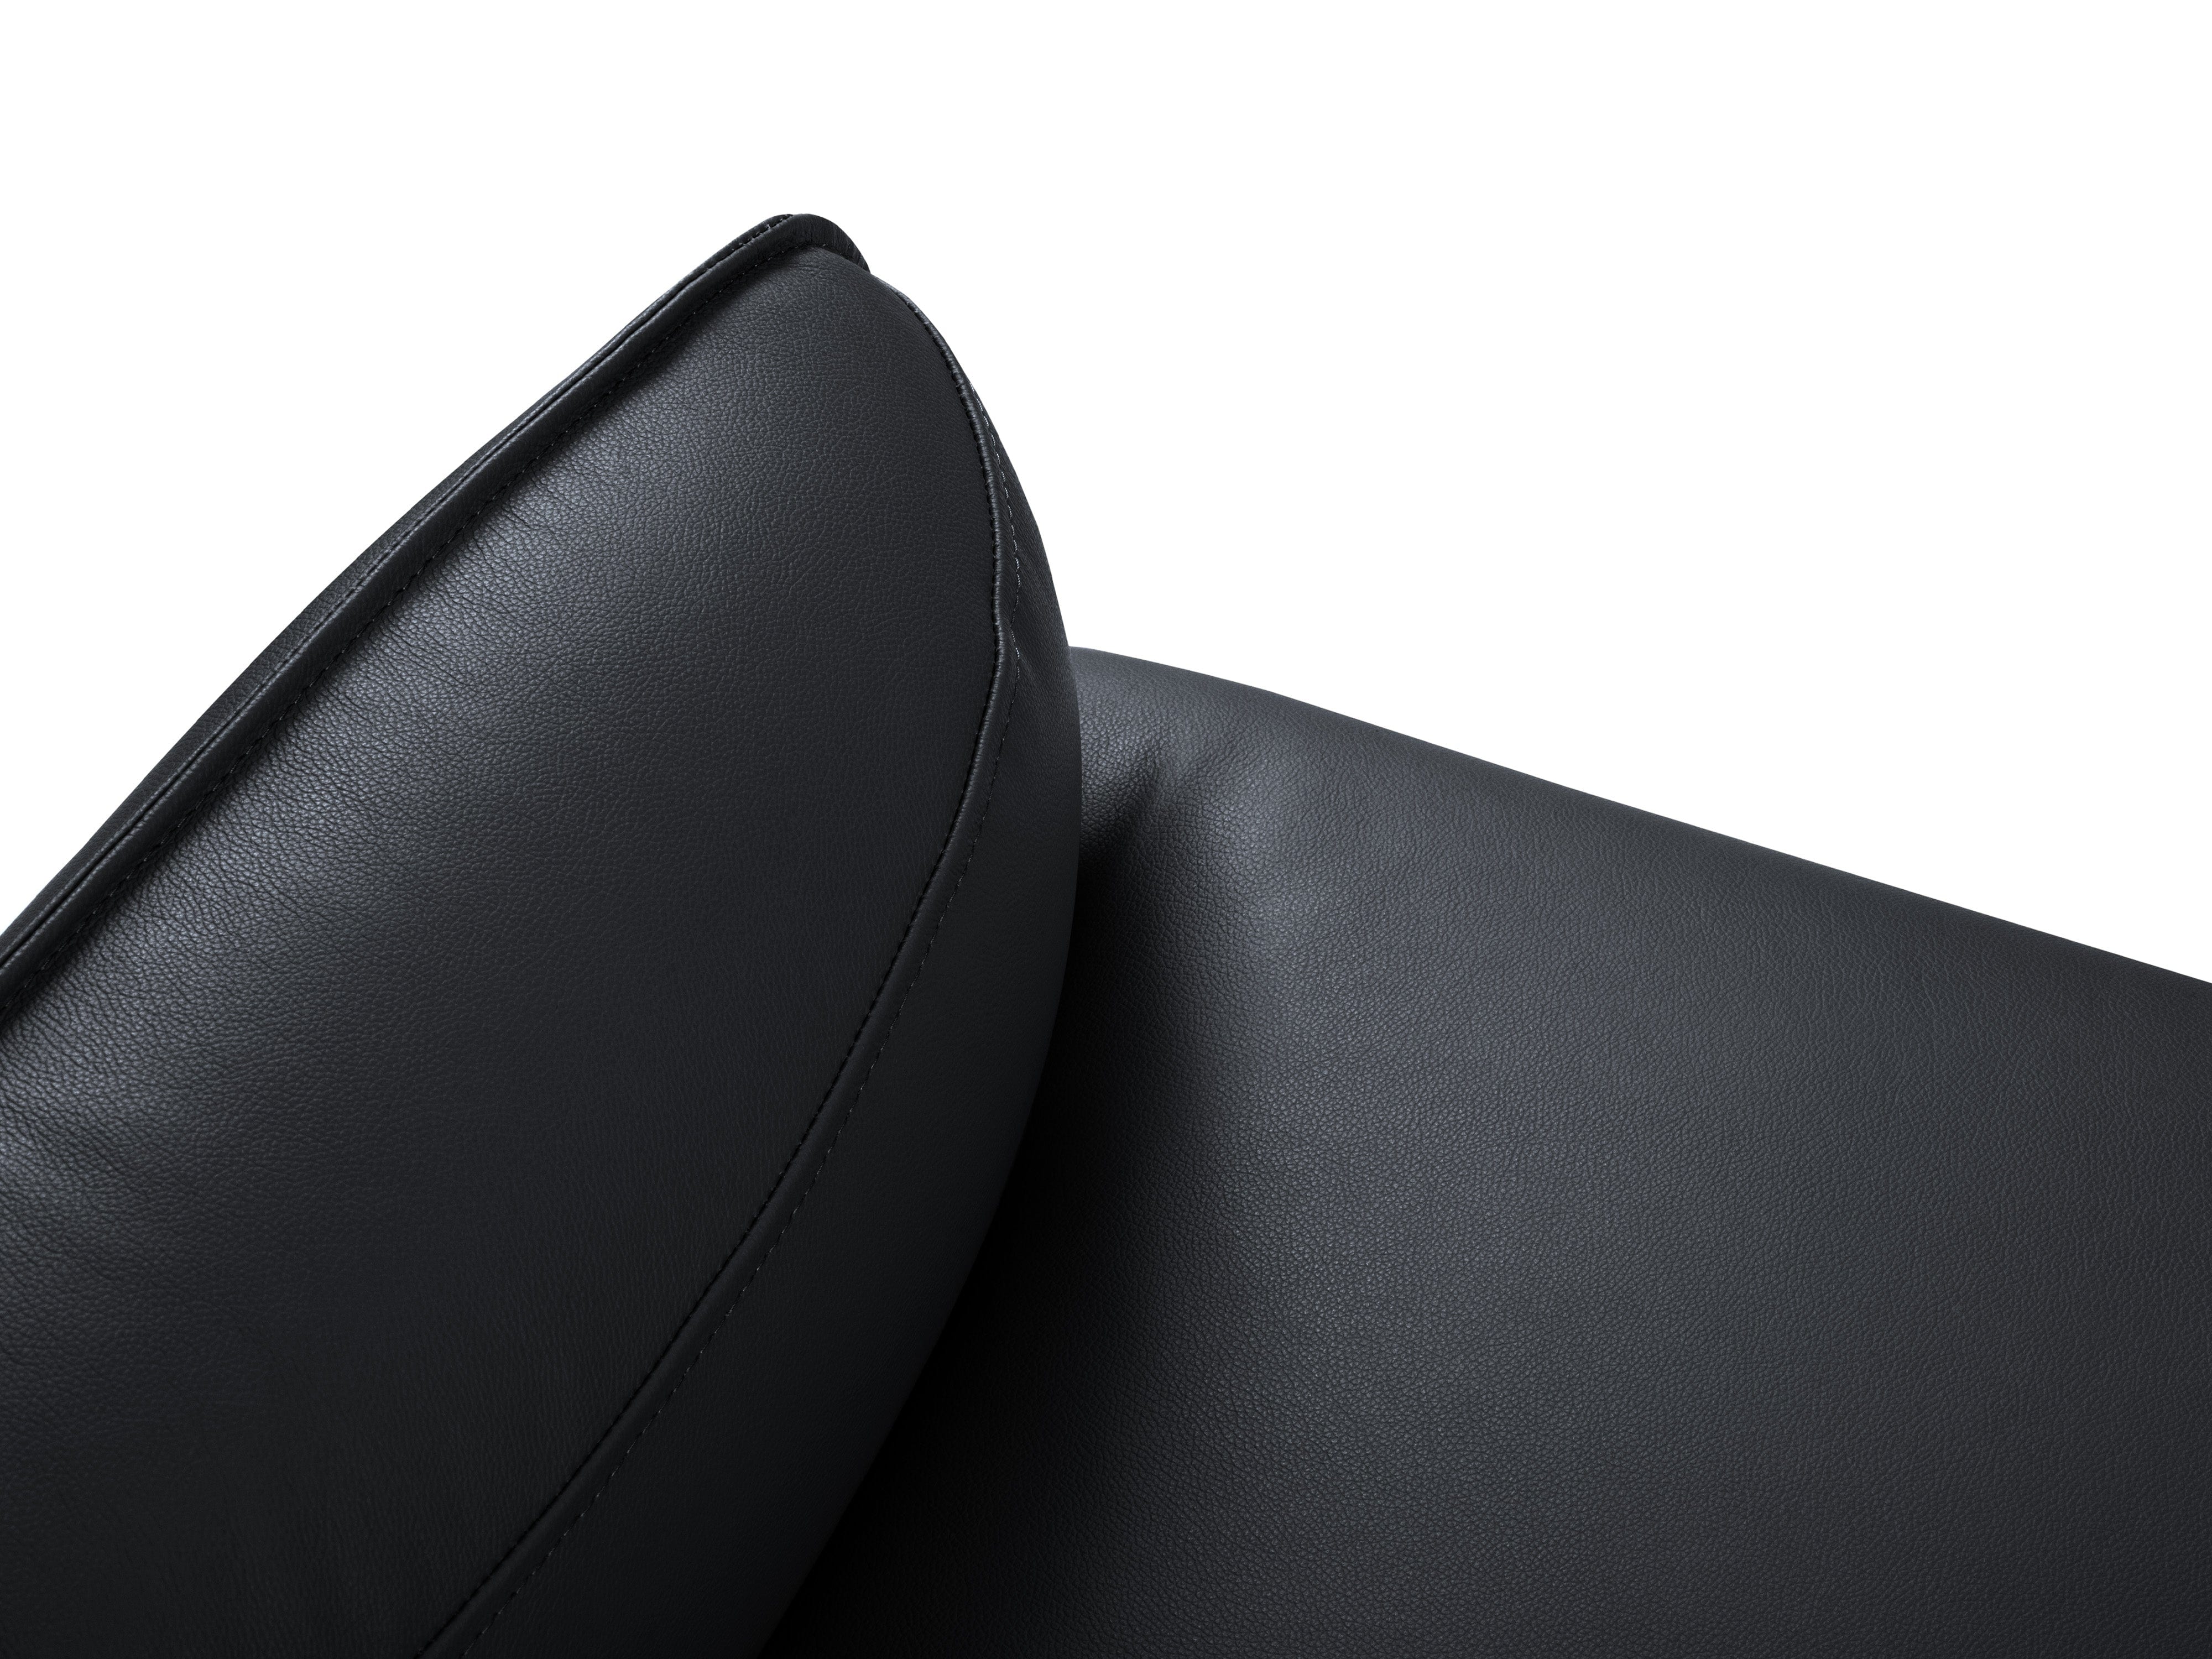 Genuine Leather Sofa, "Neso", 2 Seats, 175x90x76
 ,Dark Blue,Black Metal, Windsor & Co, Eye on Design